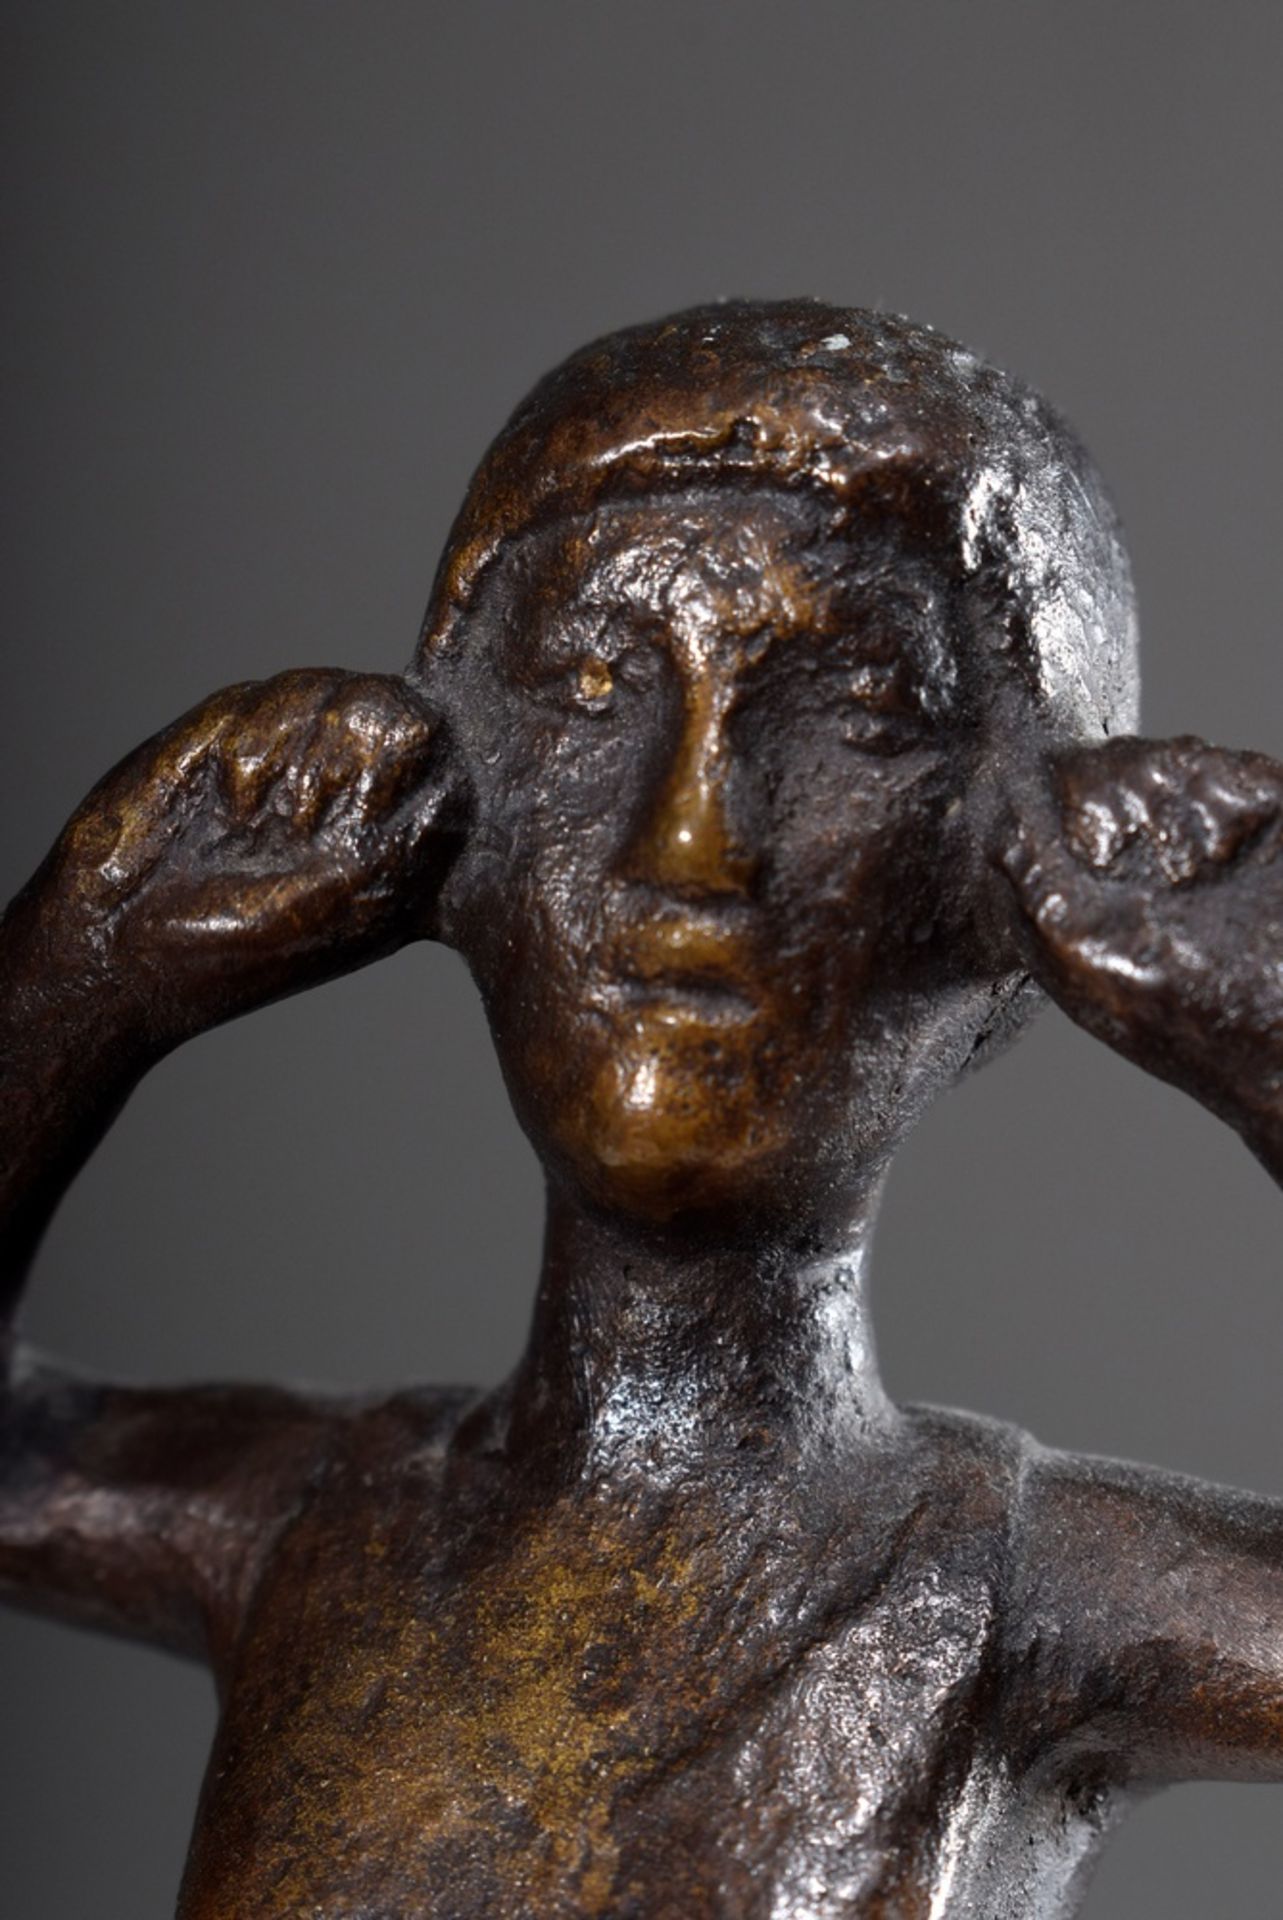 Meyer, Ehler (1923-2002) "Jasmine", bronze, 97/200, cast Barth Elmenhorst, art award 1979 of the fo - Image 4 of 6